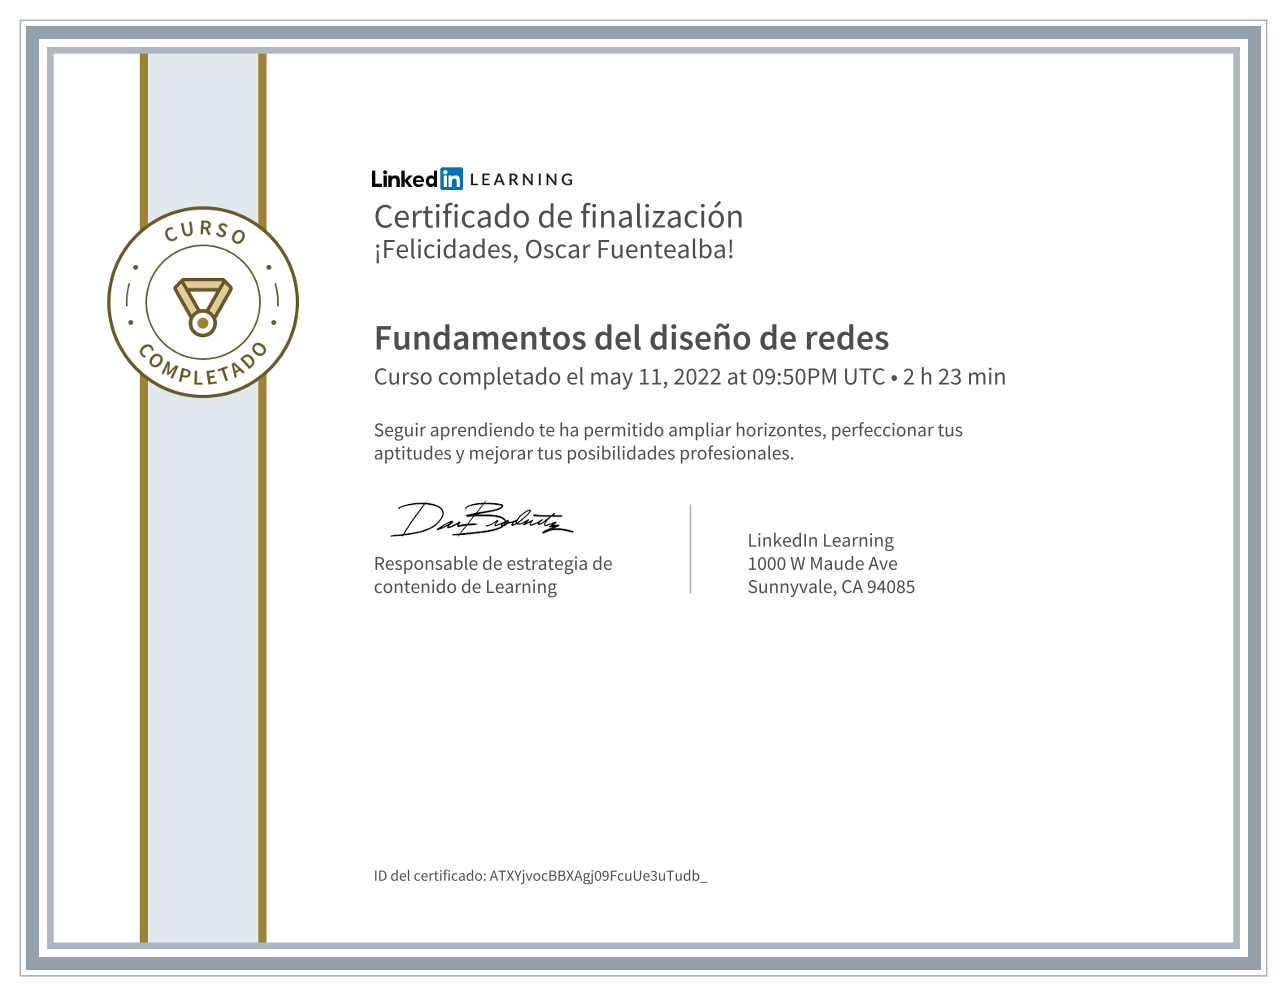 Certificate of completion for Fundamentos del diseño de redes content earned by Oscar Fuentealba